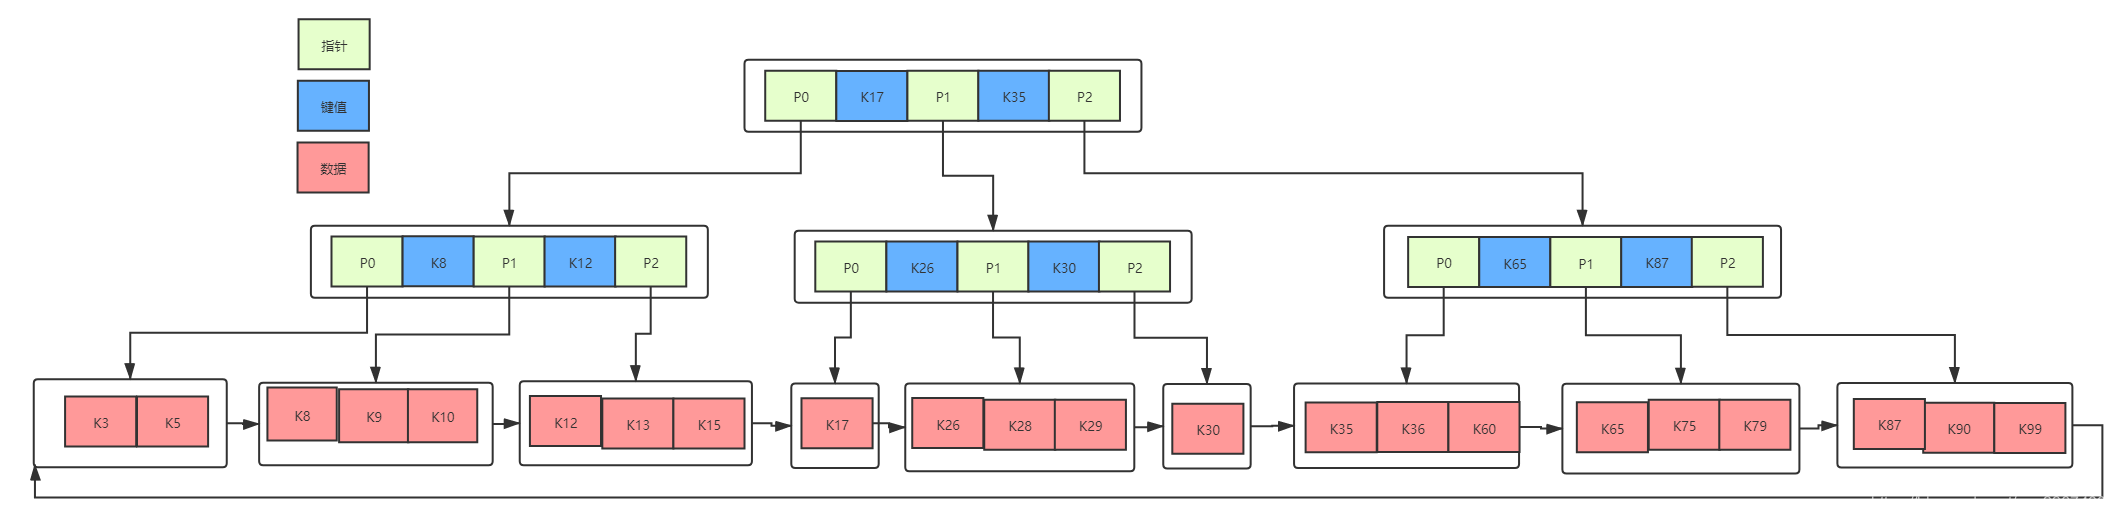 MySQL中的索引结构B-Tree和B+Tree_B+Tree_03